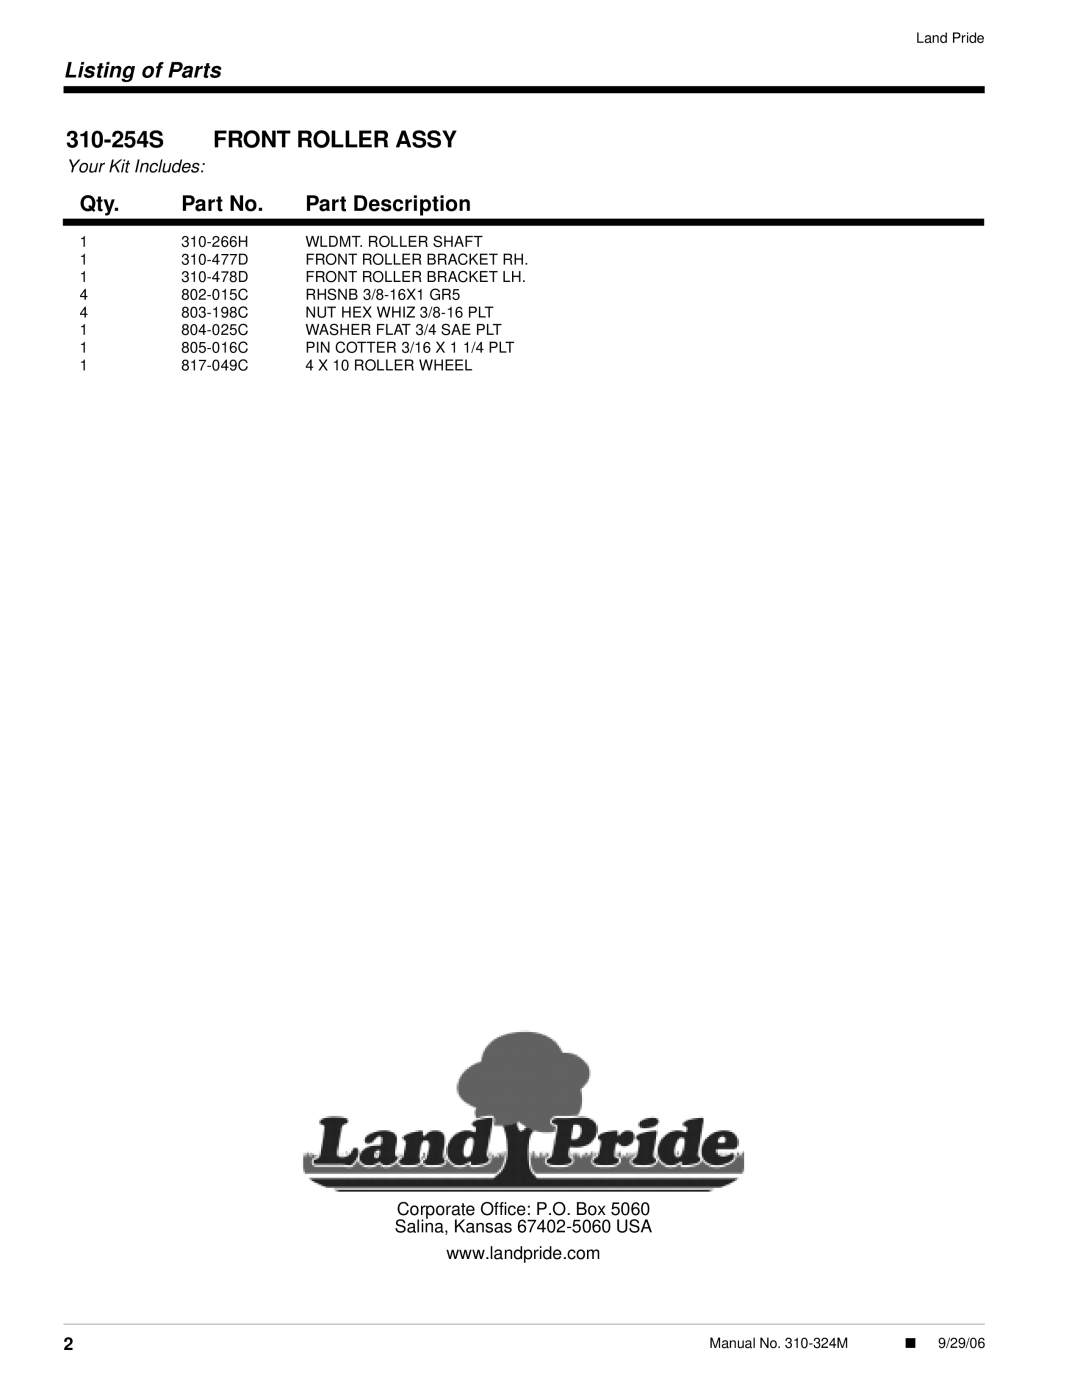 Land Pride FDR2560 310-254SFRONT ROLLER ASSY, Listing of Parts, Part Description, Your Kit Includes 